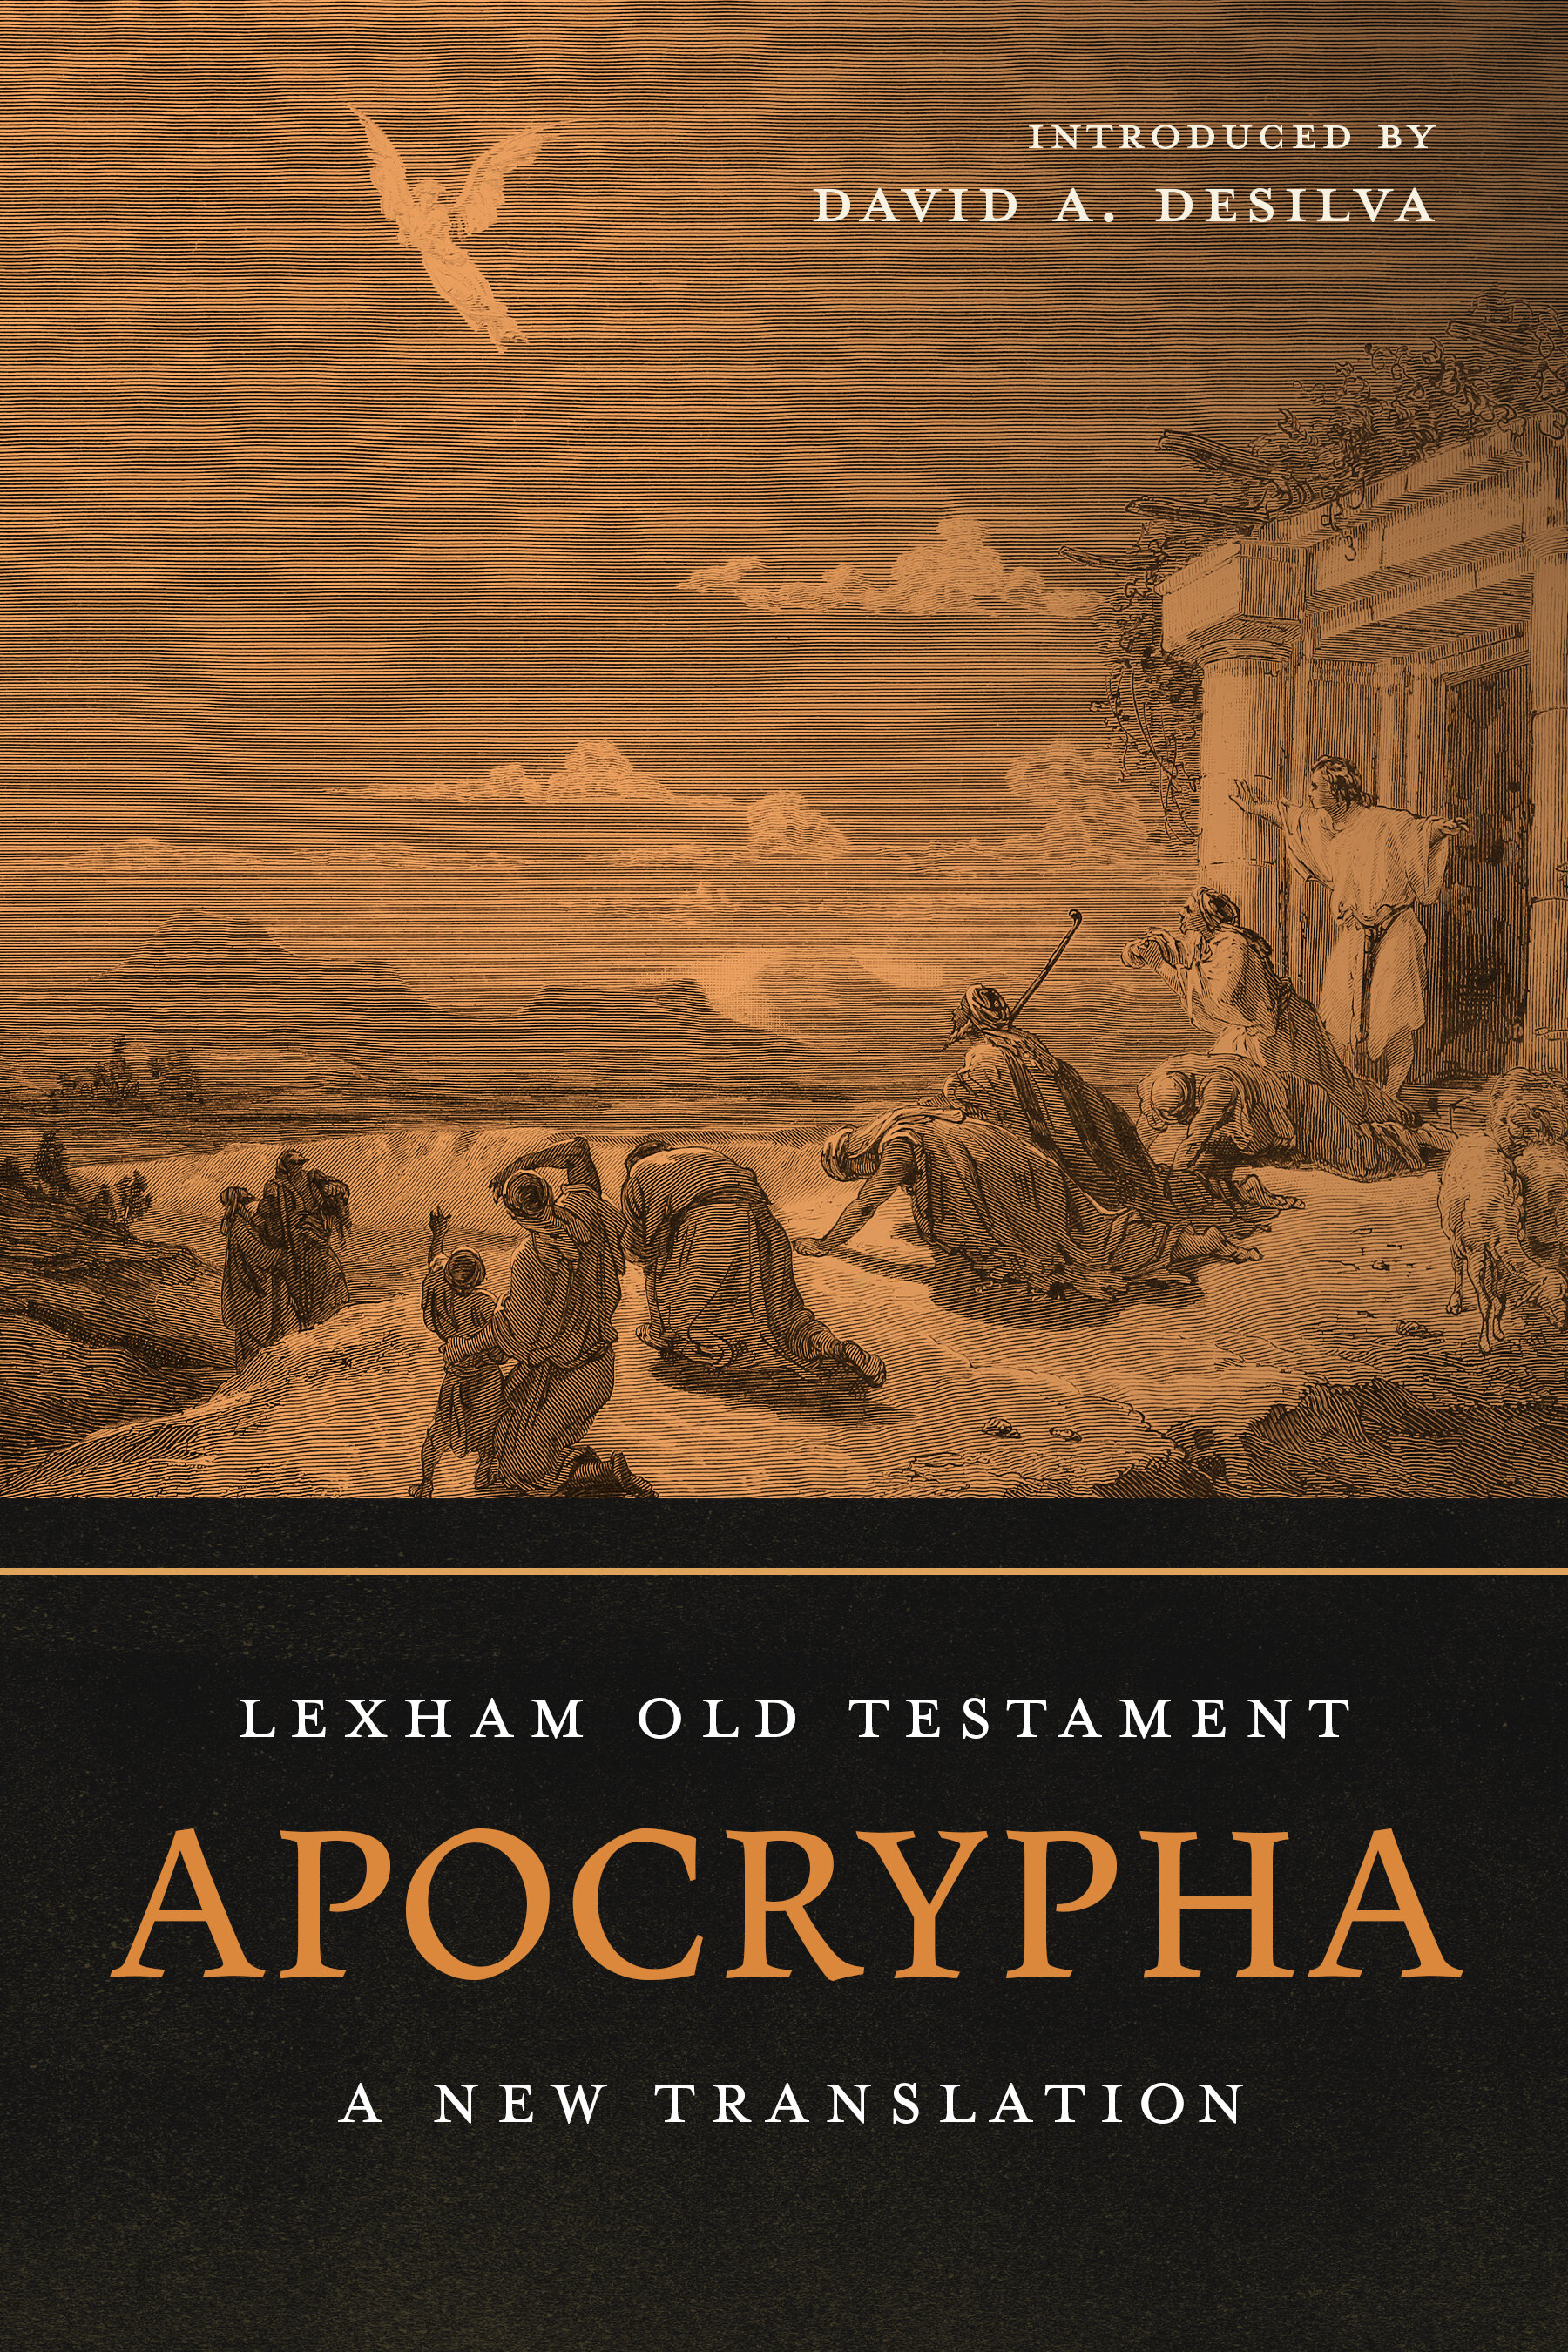 The Lexham Old Testament Apocrypha: A New Translation